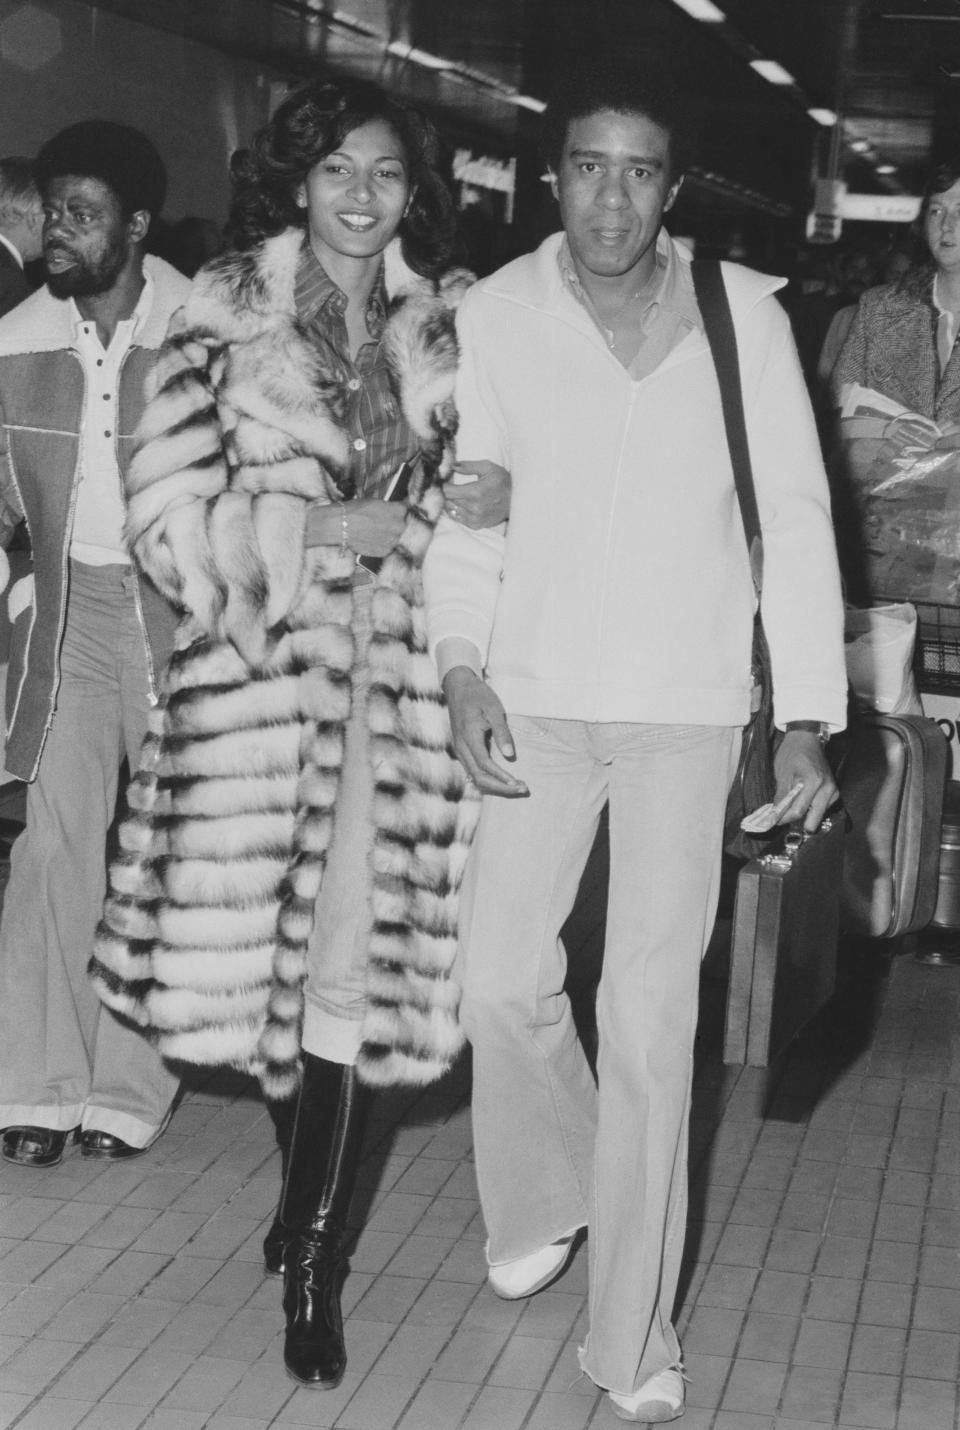 Pam Grier and Richard Pryor at Heathrow Airport, London, UK, April 1, 1977.